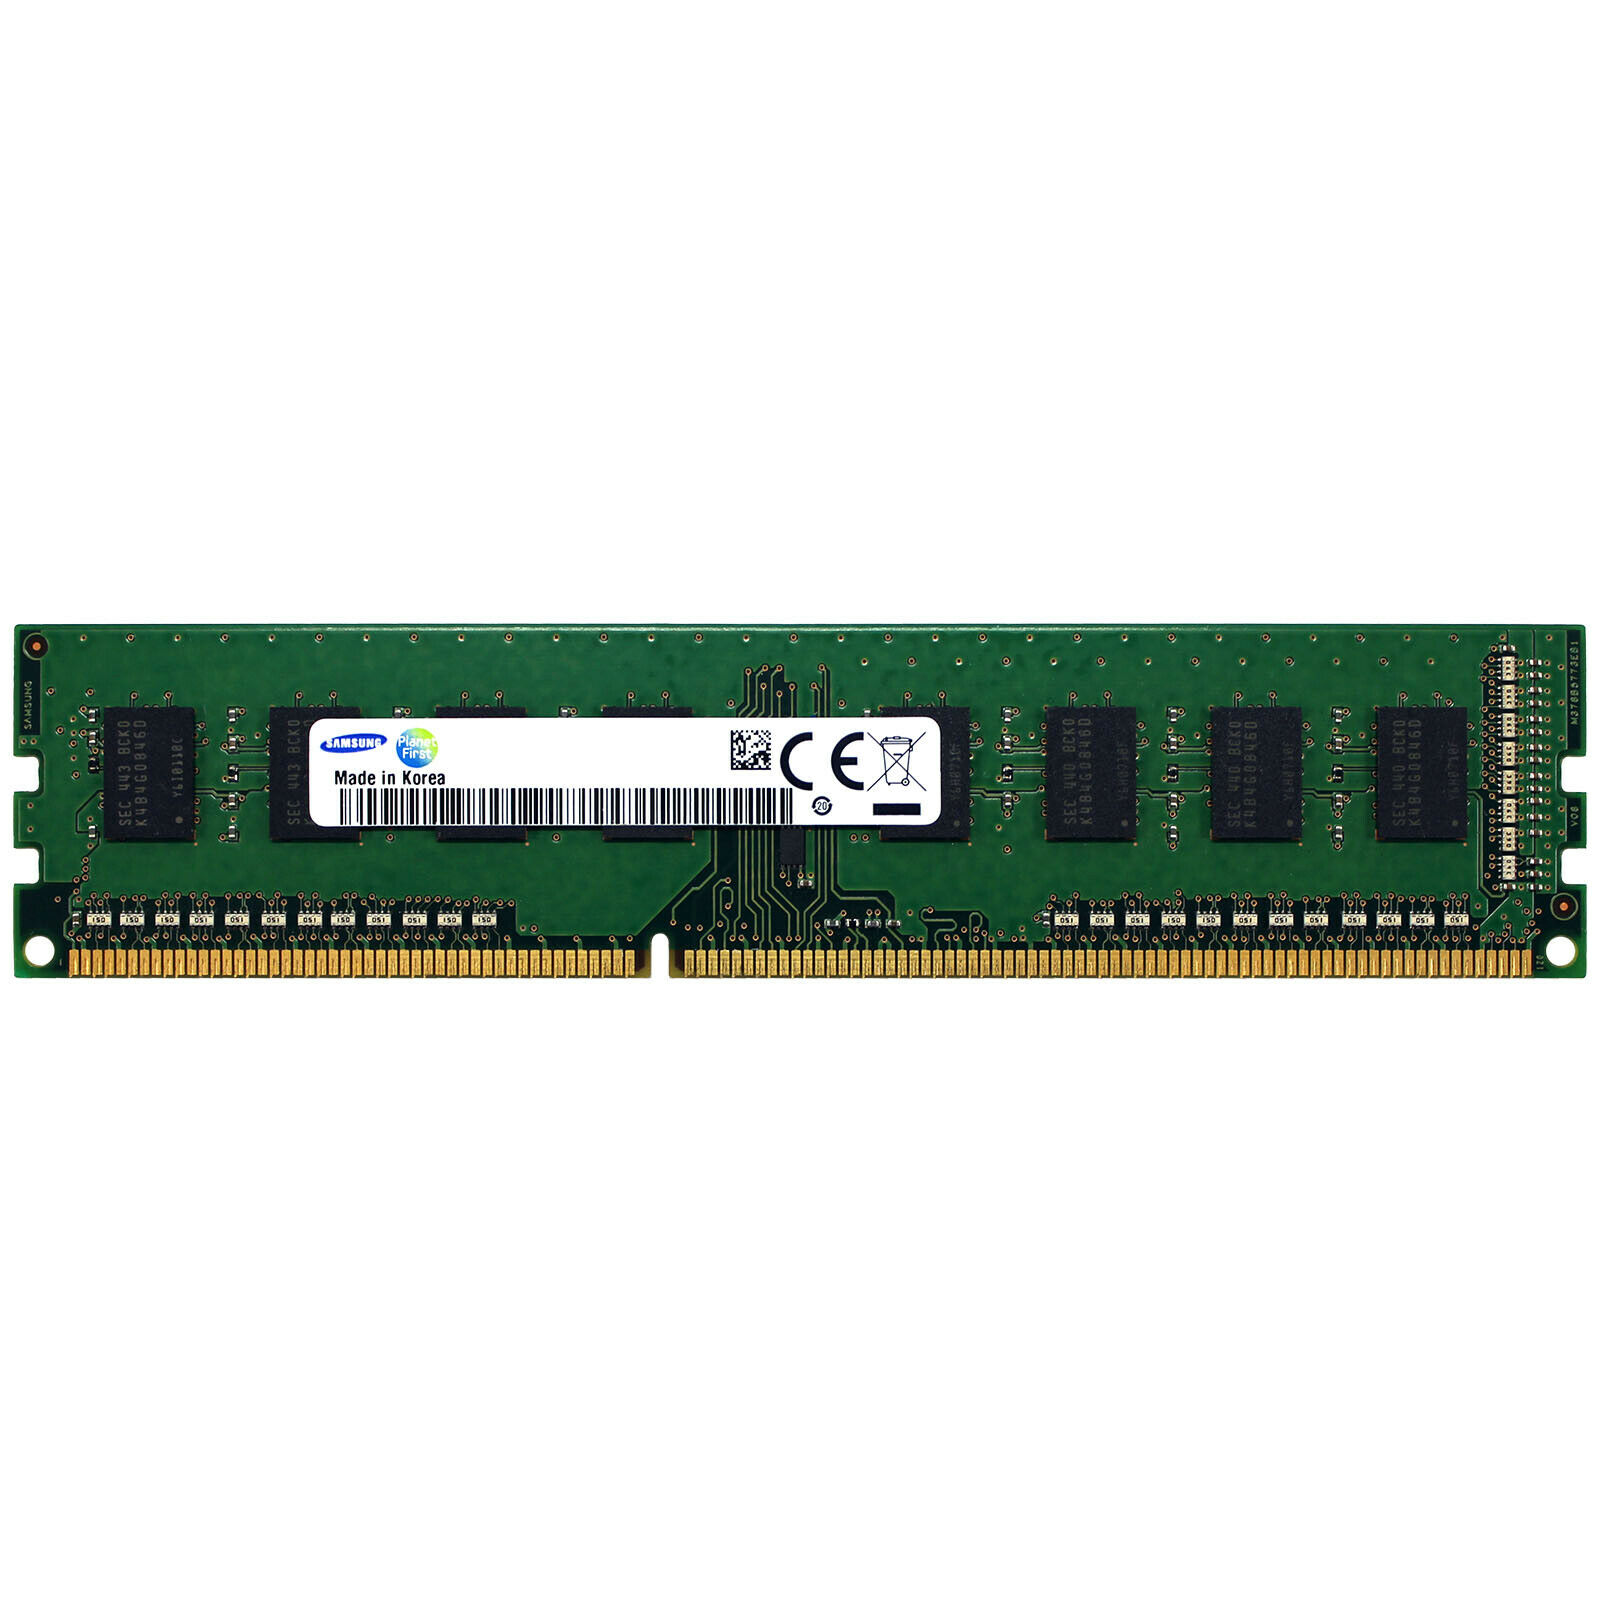 Samsung 4GB 1Rx8 PC3-12800 DDR3 1600MHz 1.5V DIMM Desktop Memory RAM 1 x 4GB